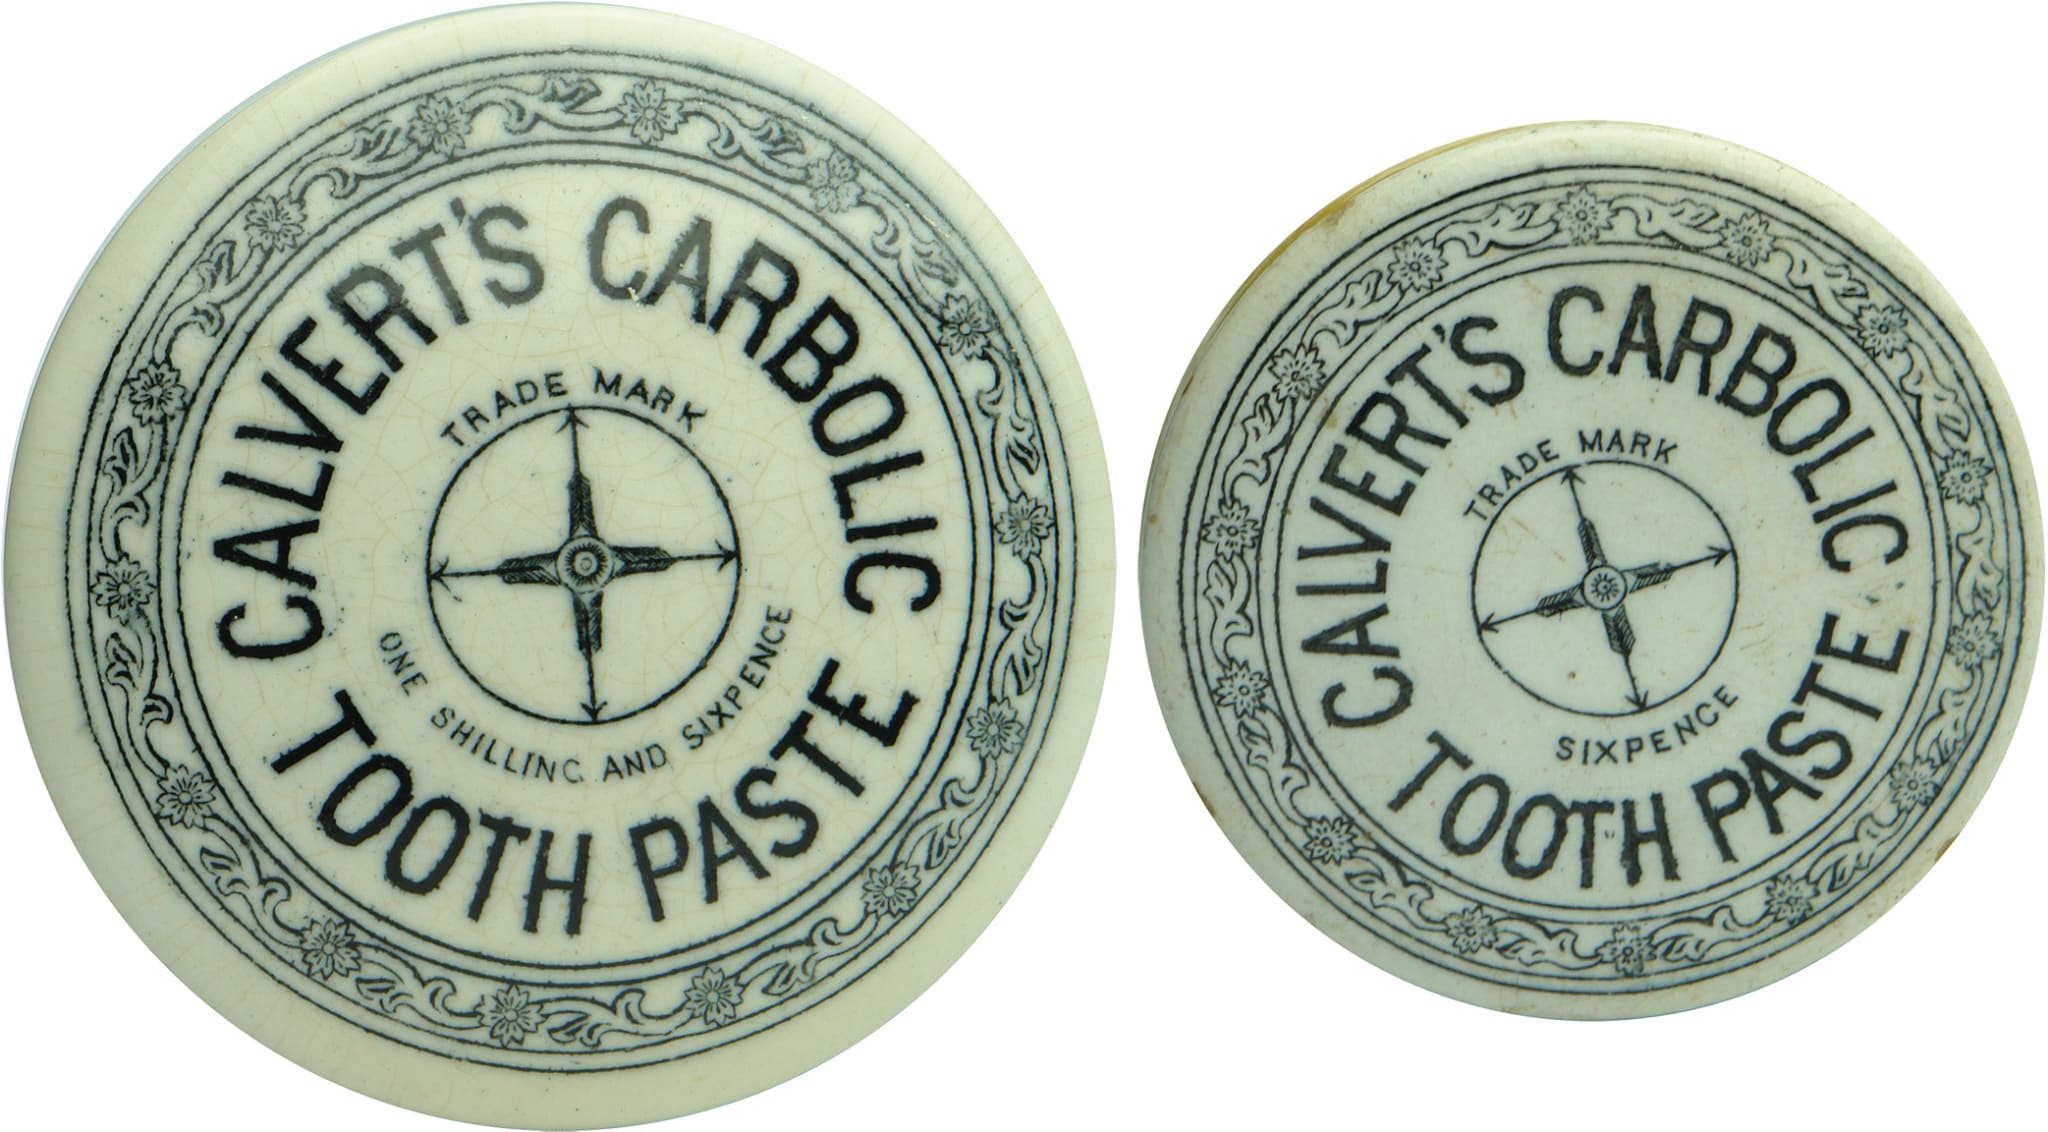 Calverts Carbolic Tooth Paste Pot Lids